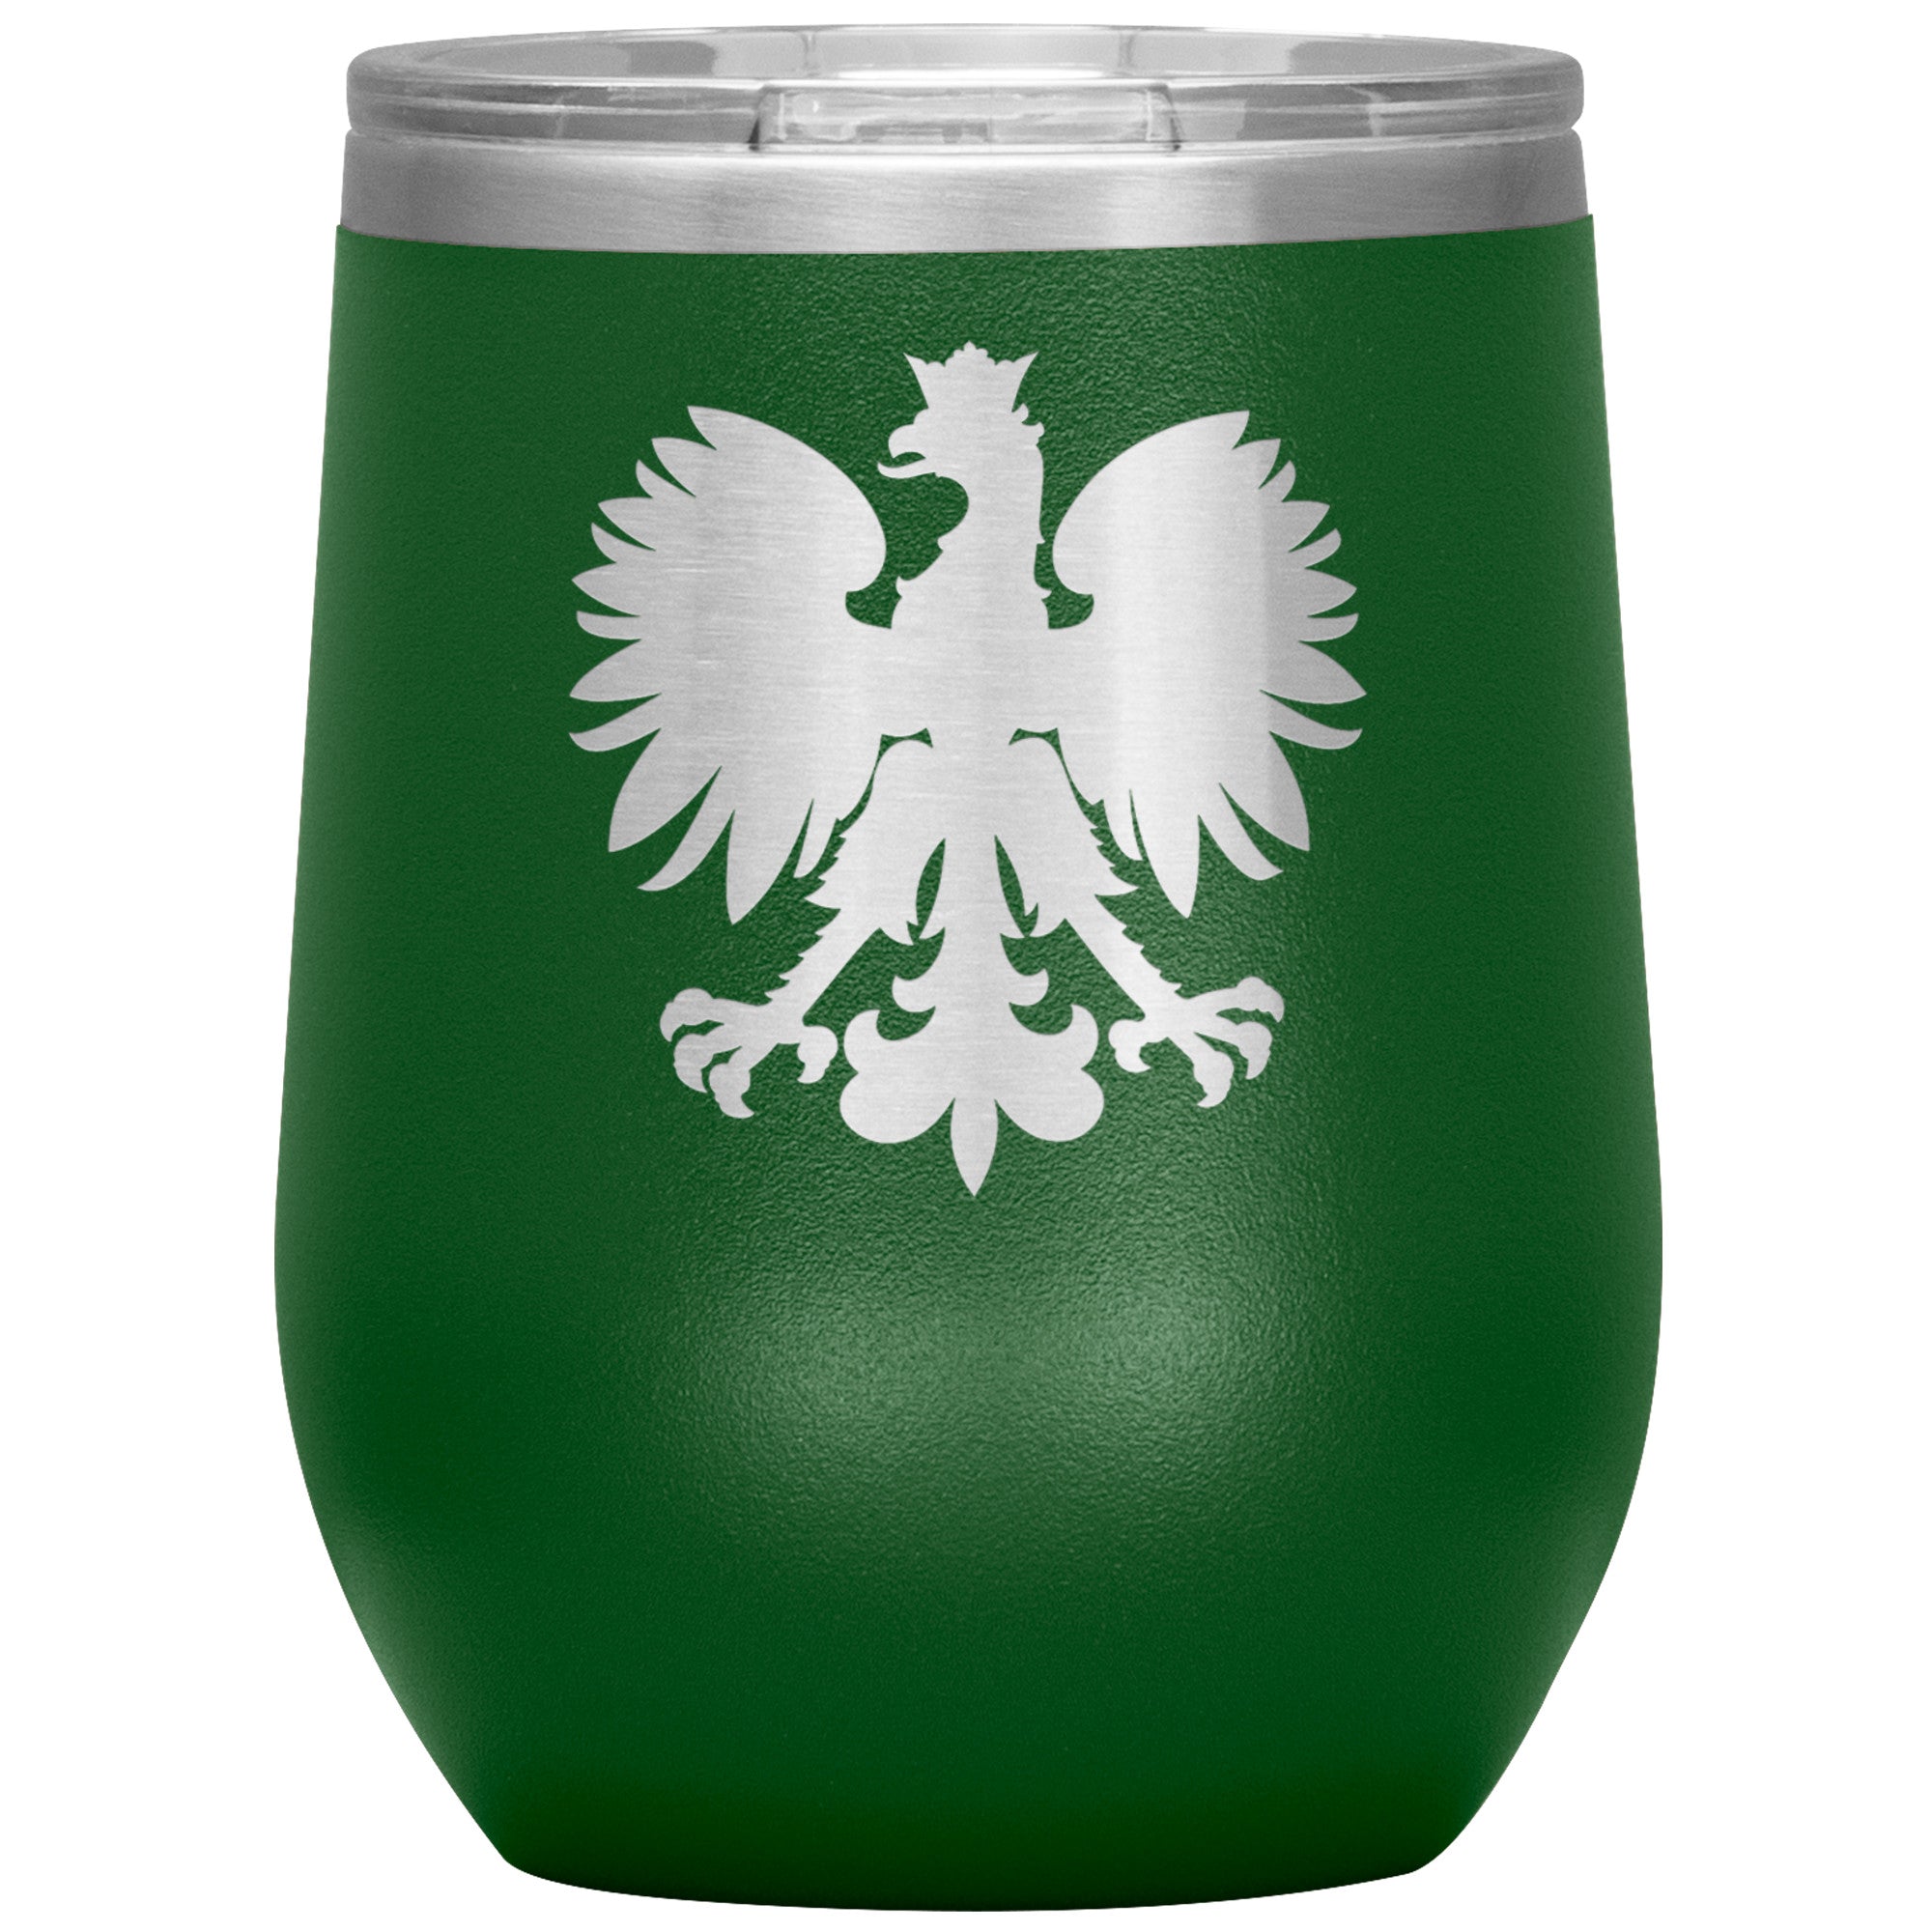 Polish Eagle Insulated Wine Tumbler Tumblers teelaunch Green  